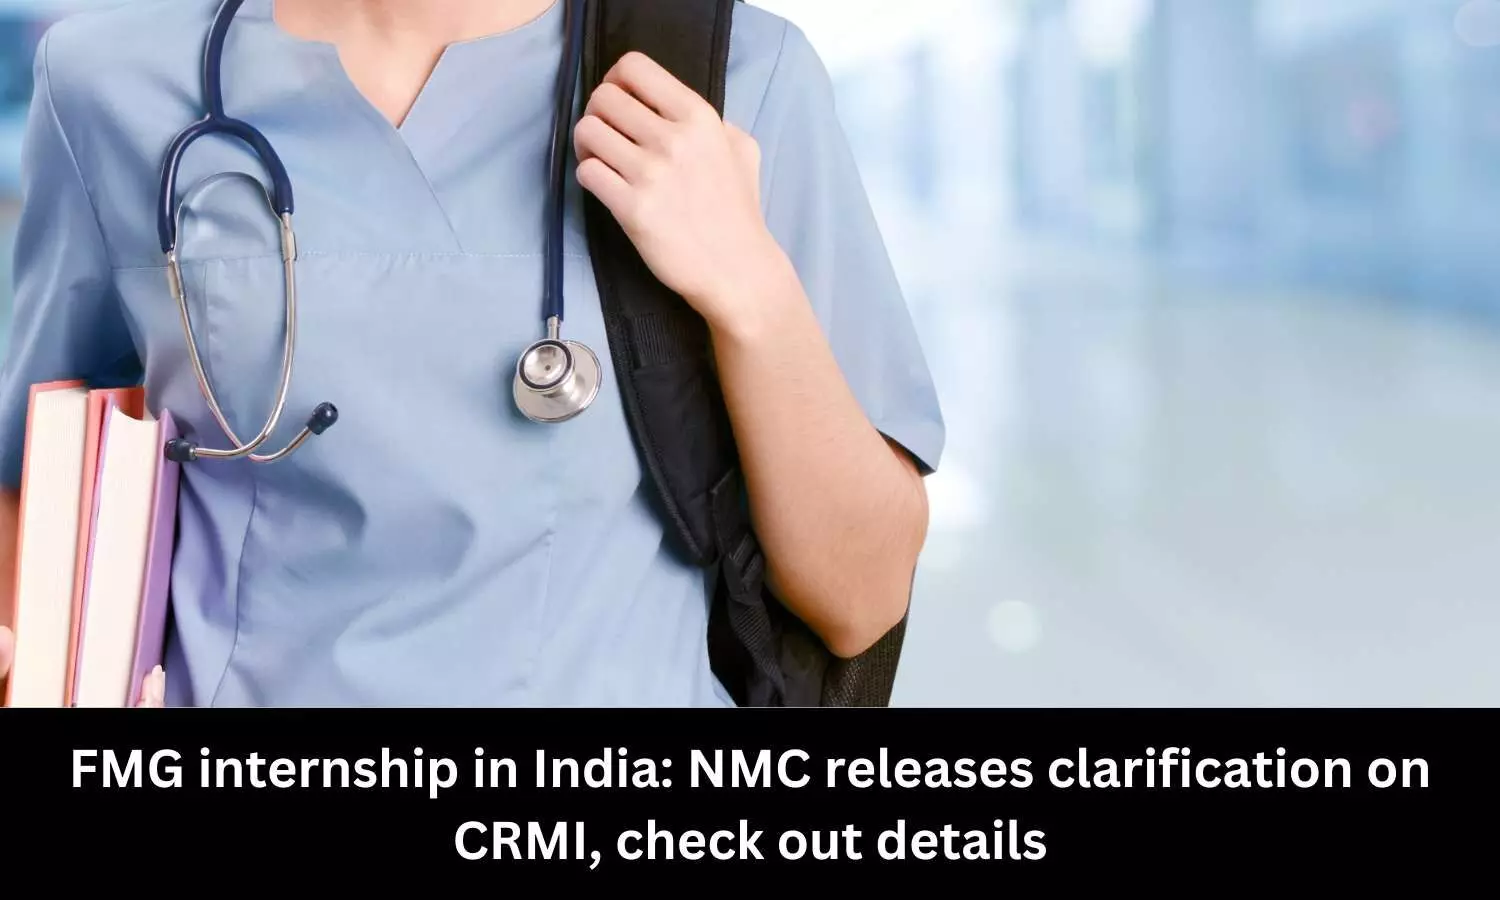 FMG internship in India: NMC releases clarification on CRMI